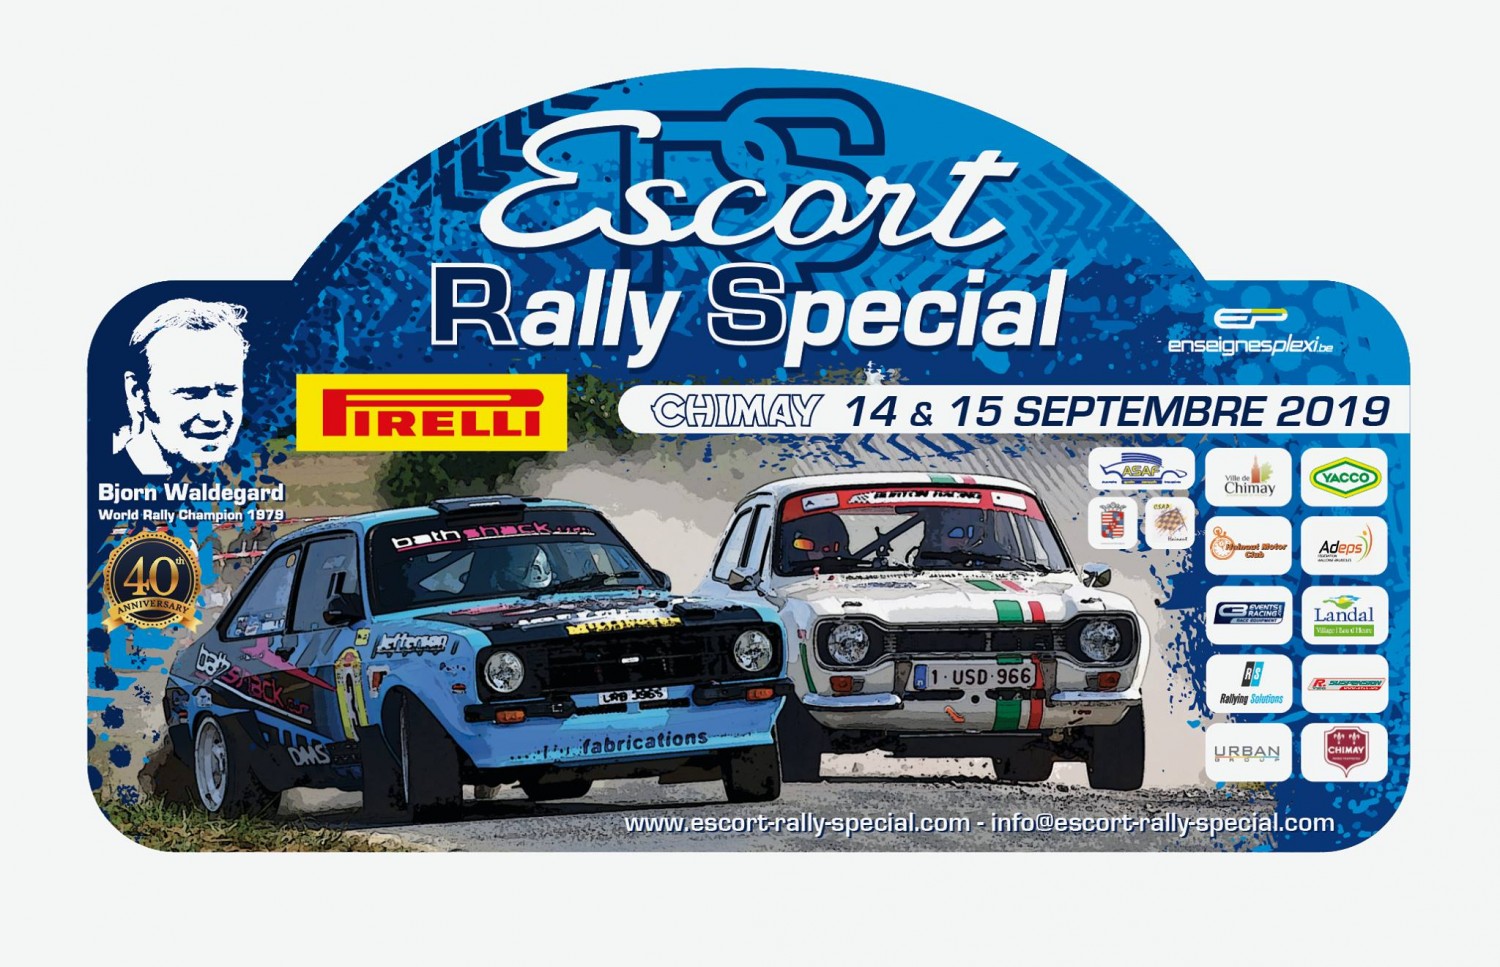 De Escort Rally Special is terug! 